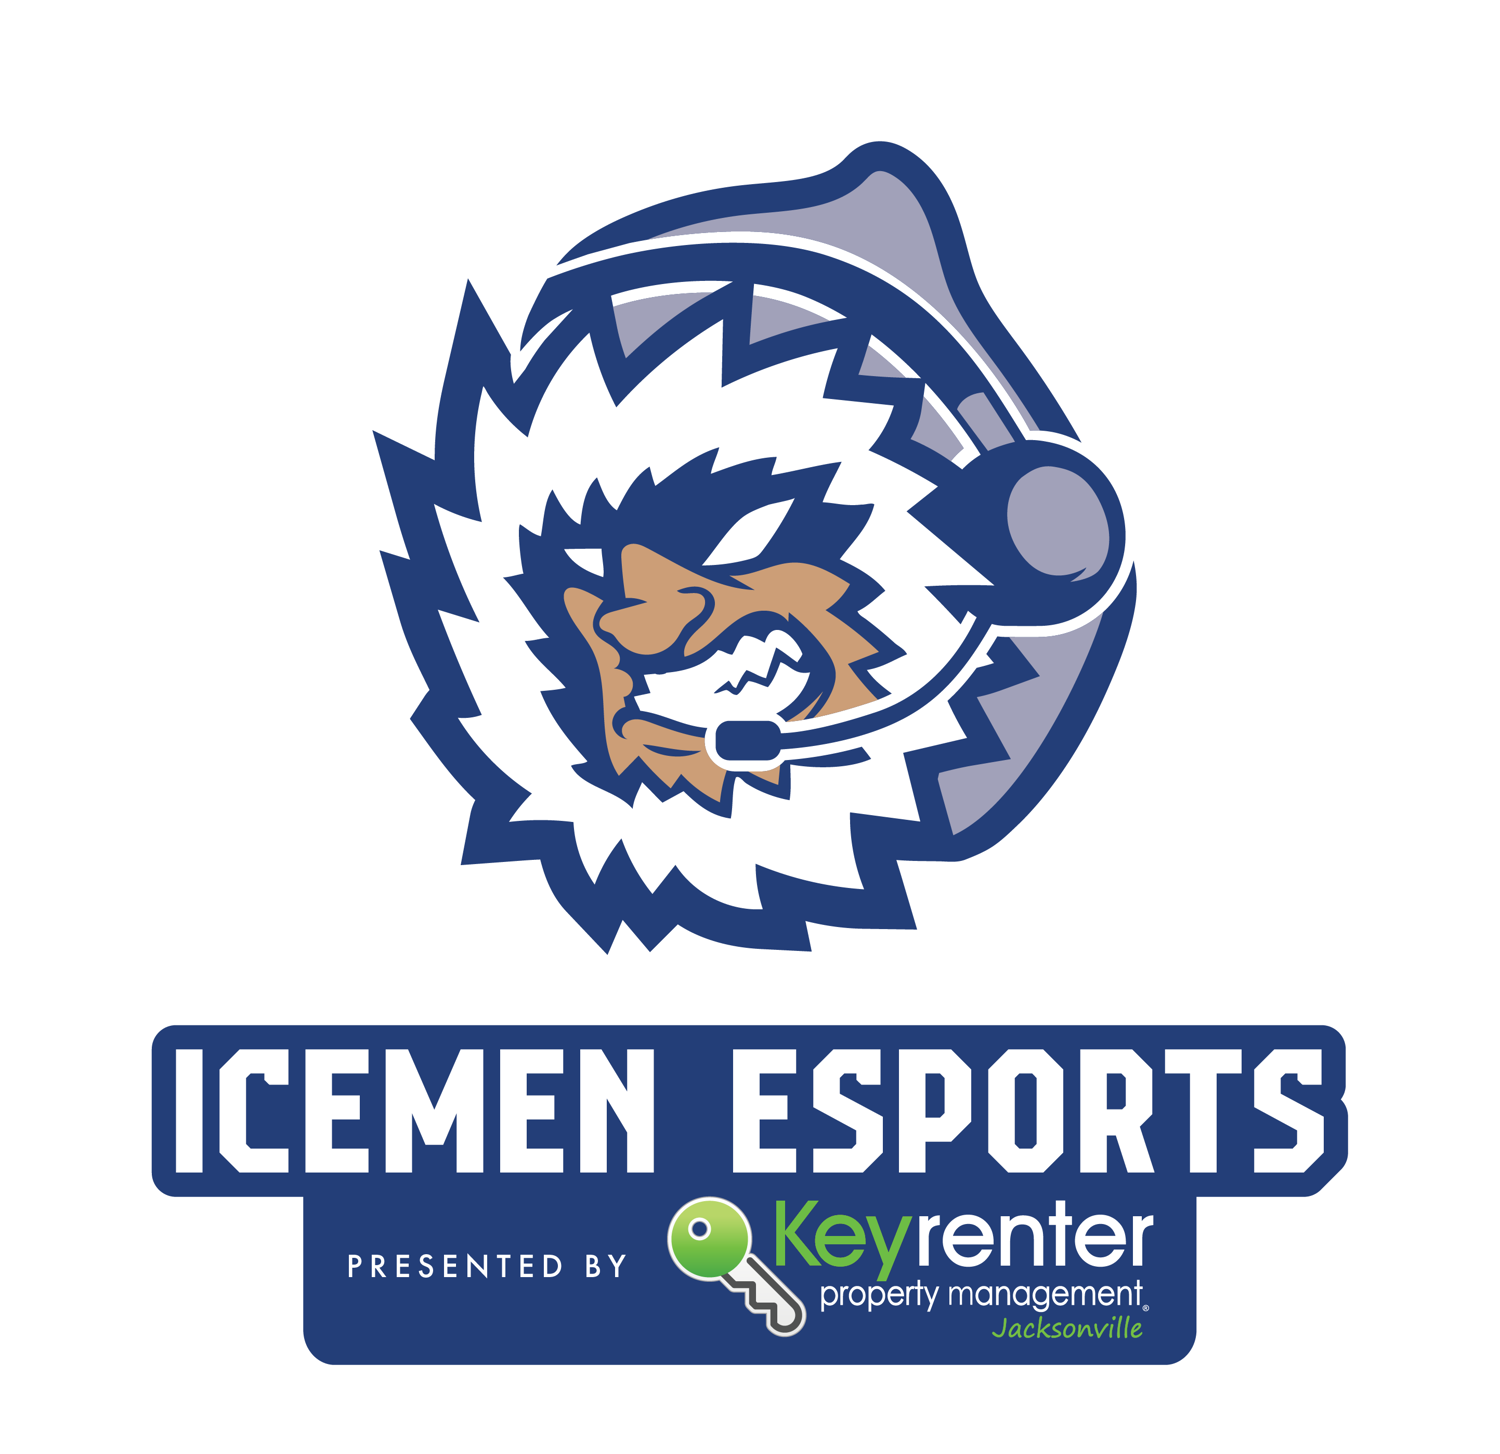 Icemen Esports Logo Keyrenter